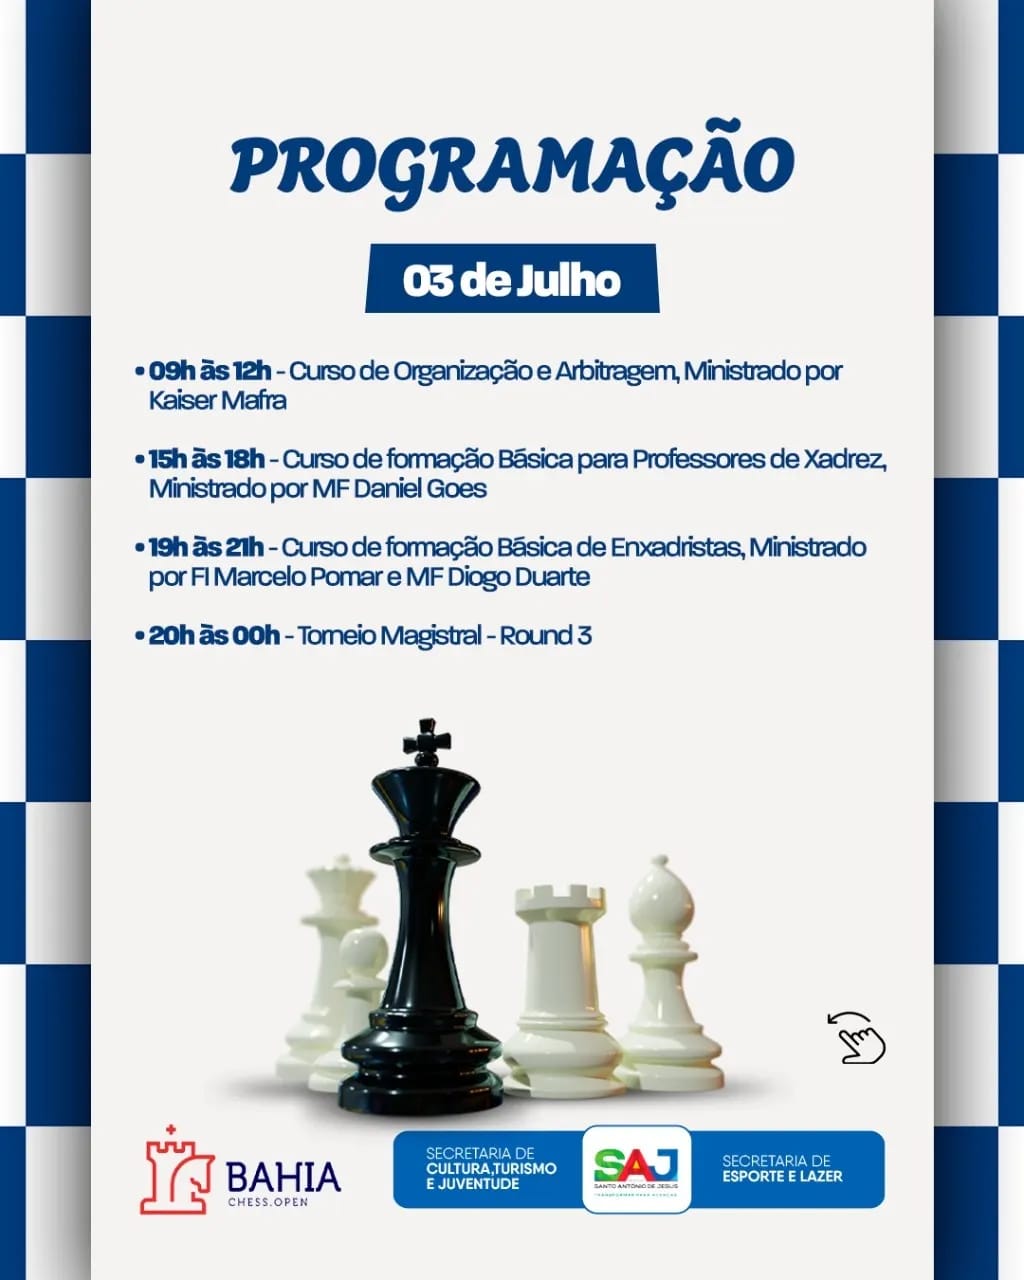 Torneio de xadrez on-line atrai personalidades e movimenta os shoppings da  Gazit Brasil no mundo virtual - ABRASCE